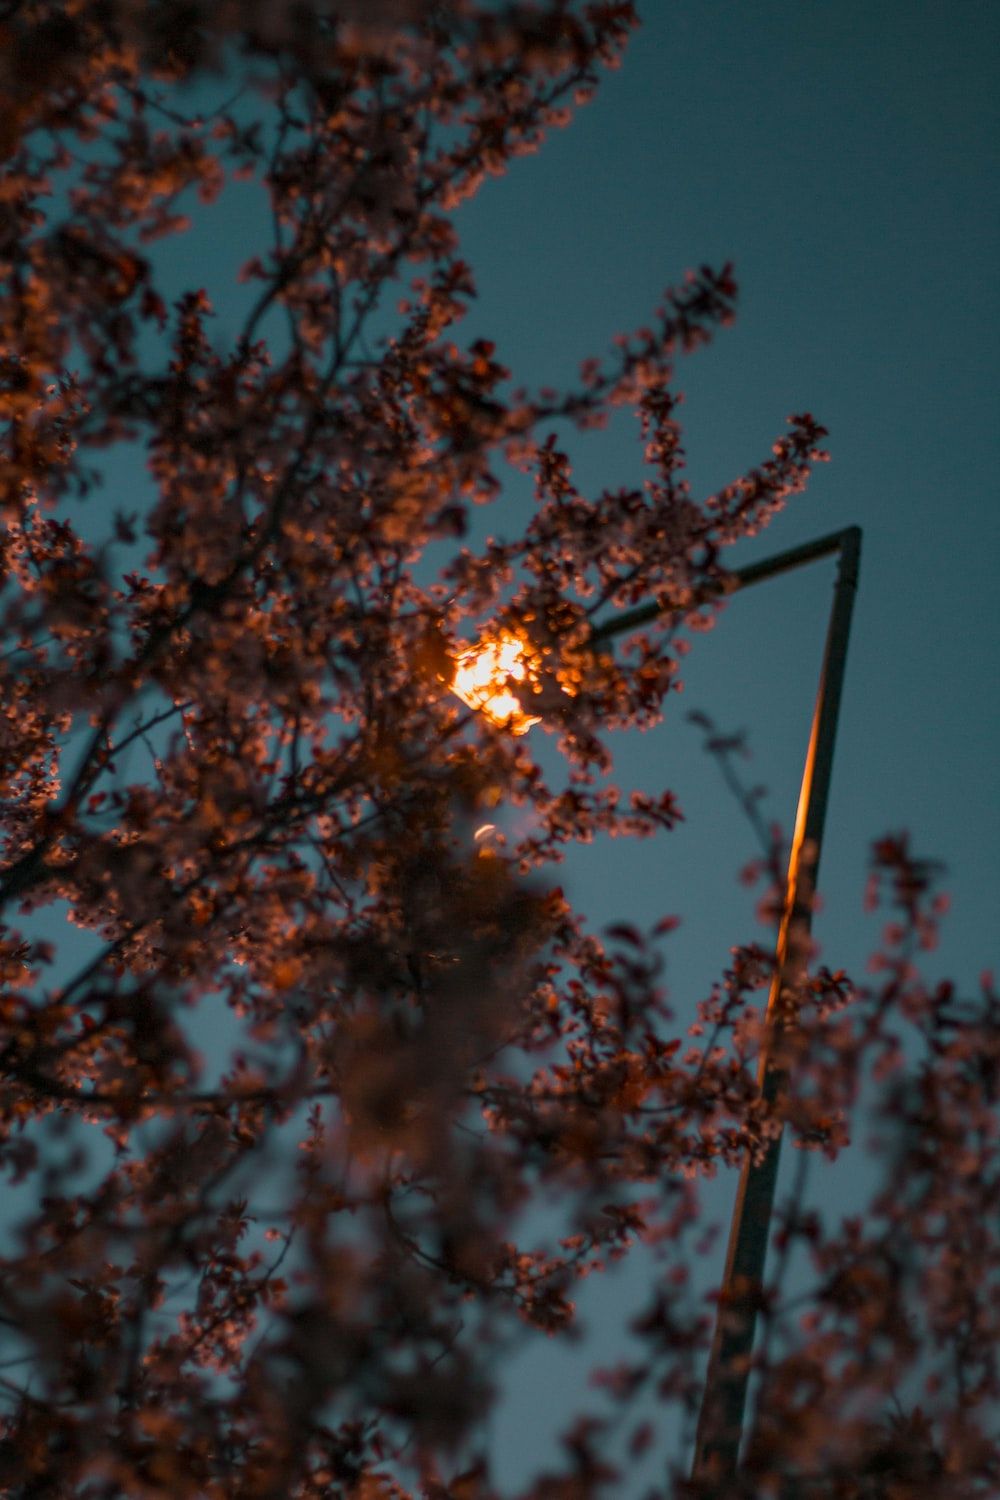 A street light is shining on the tree - Night